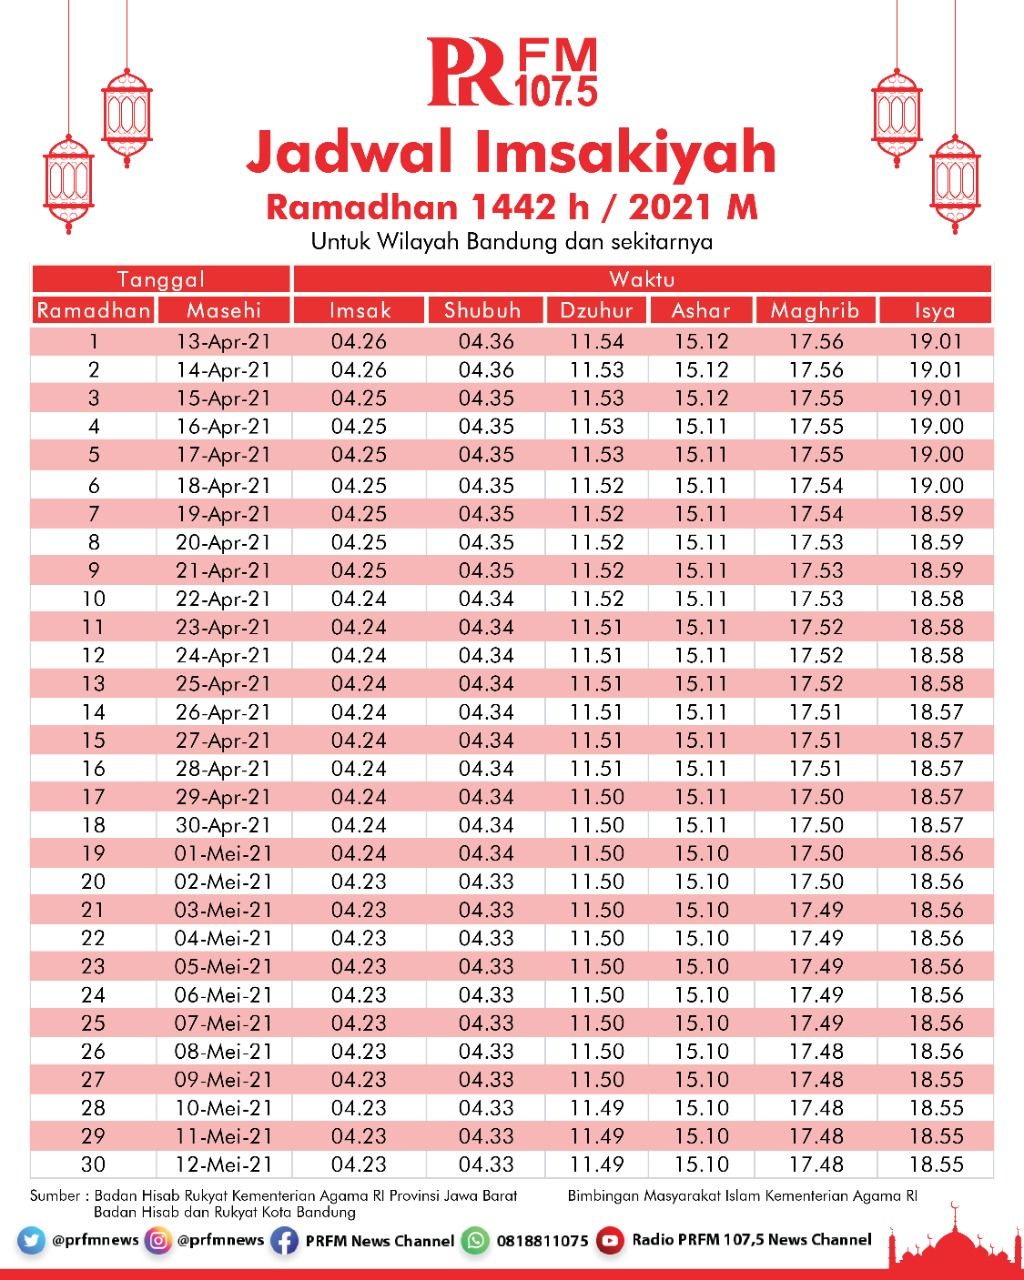 Jadwal Imsakiyah Bandung Ramadhan 2021 